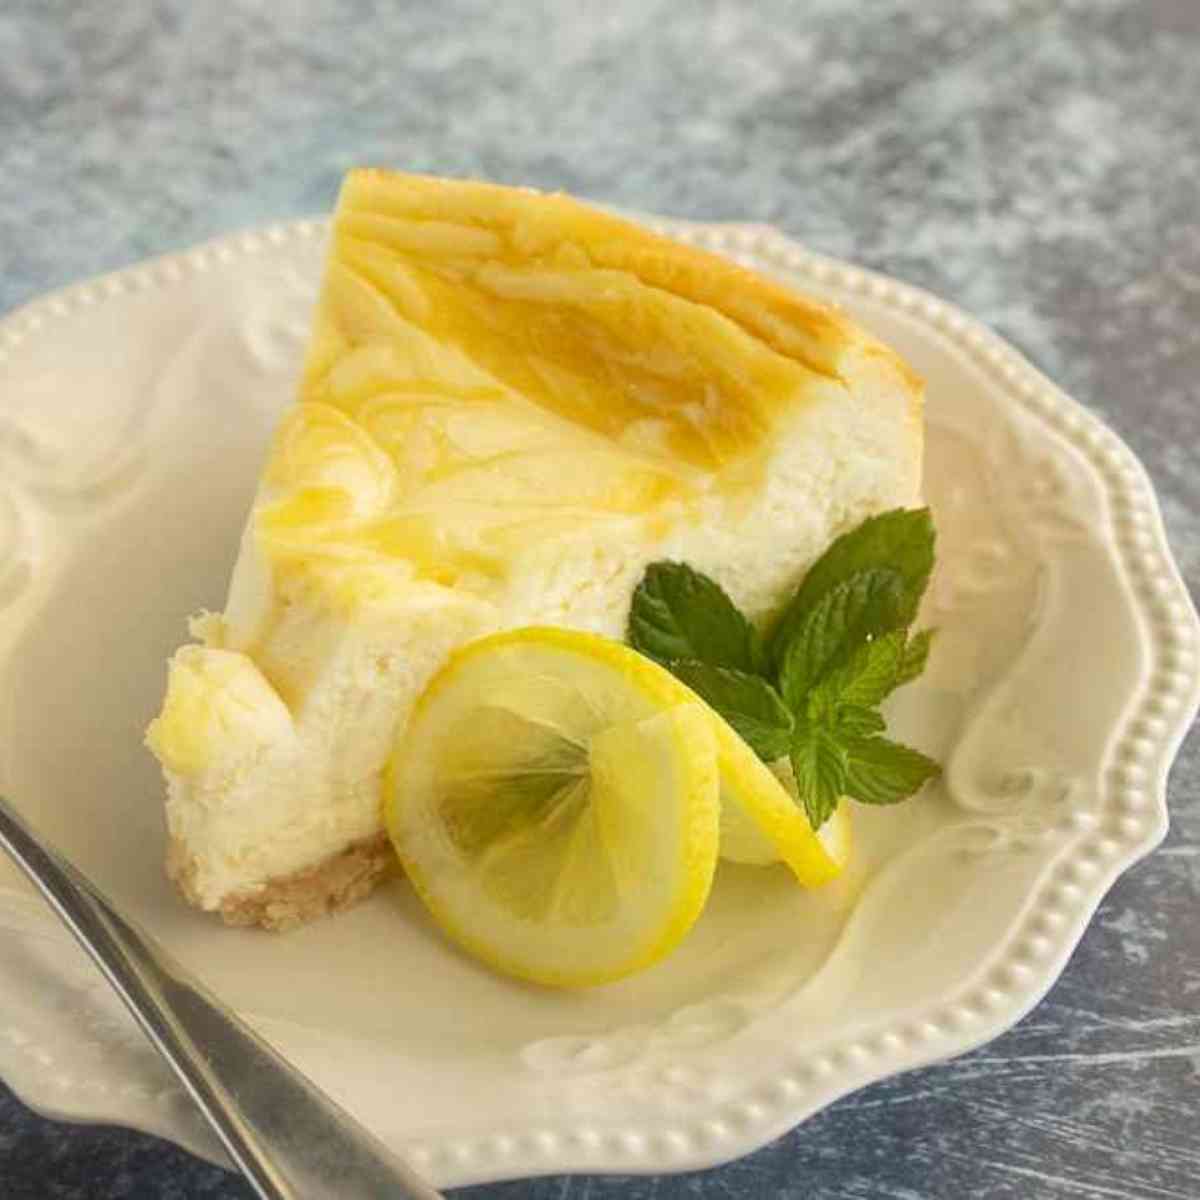 Slice of lemon swirl cheesecake garnished with mint